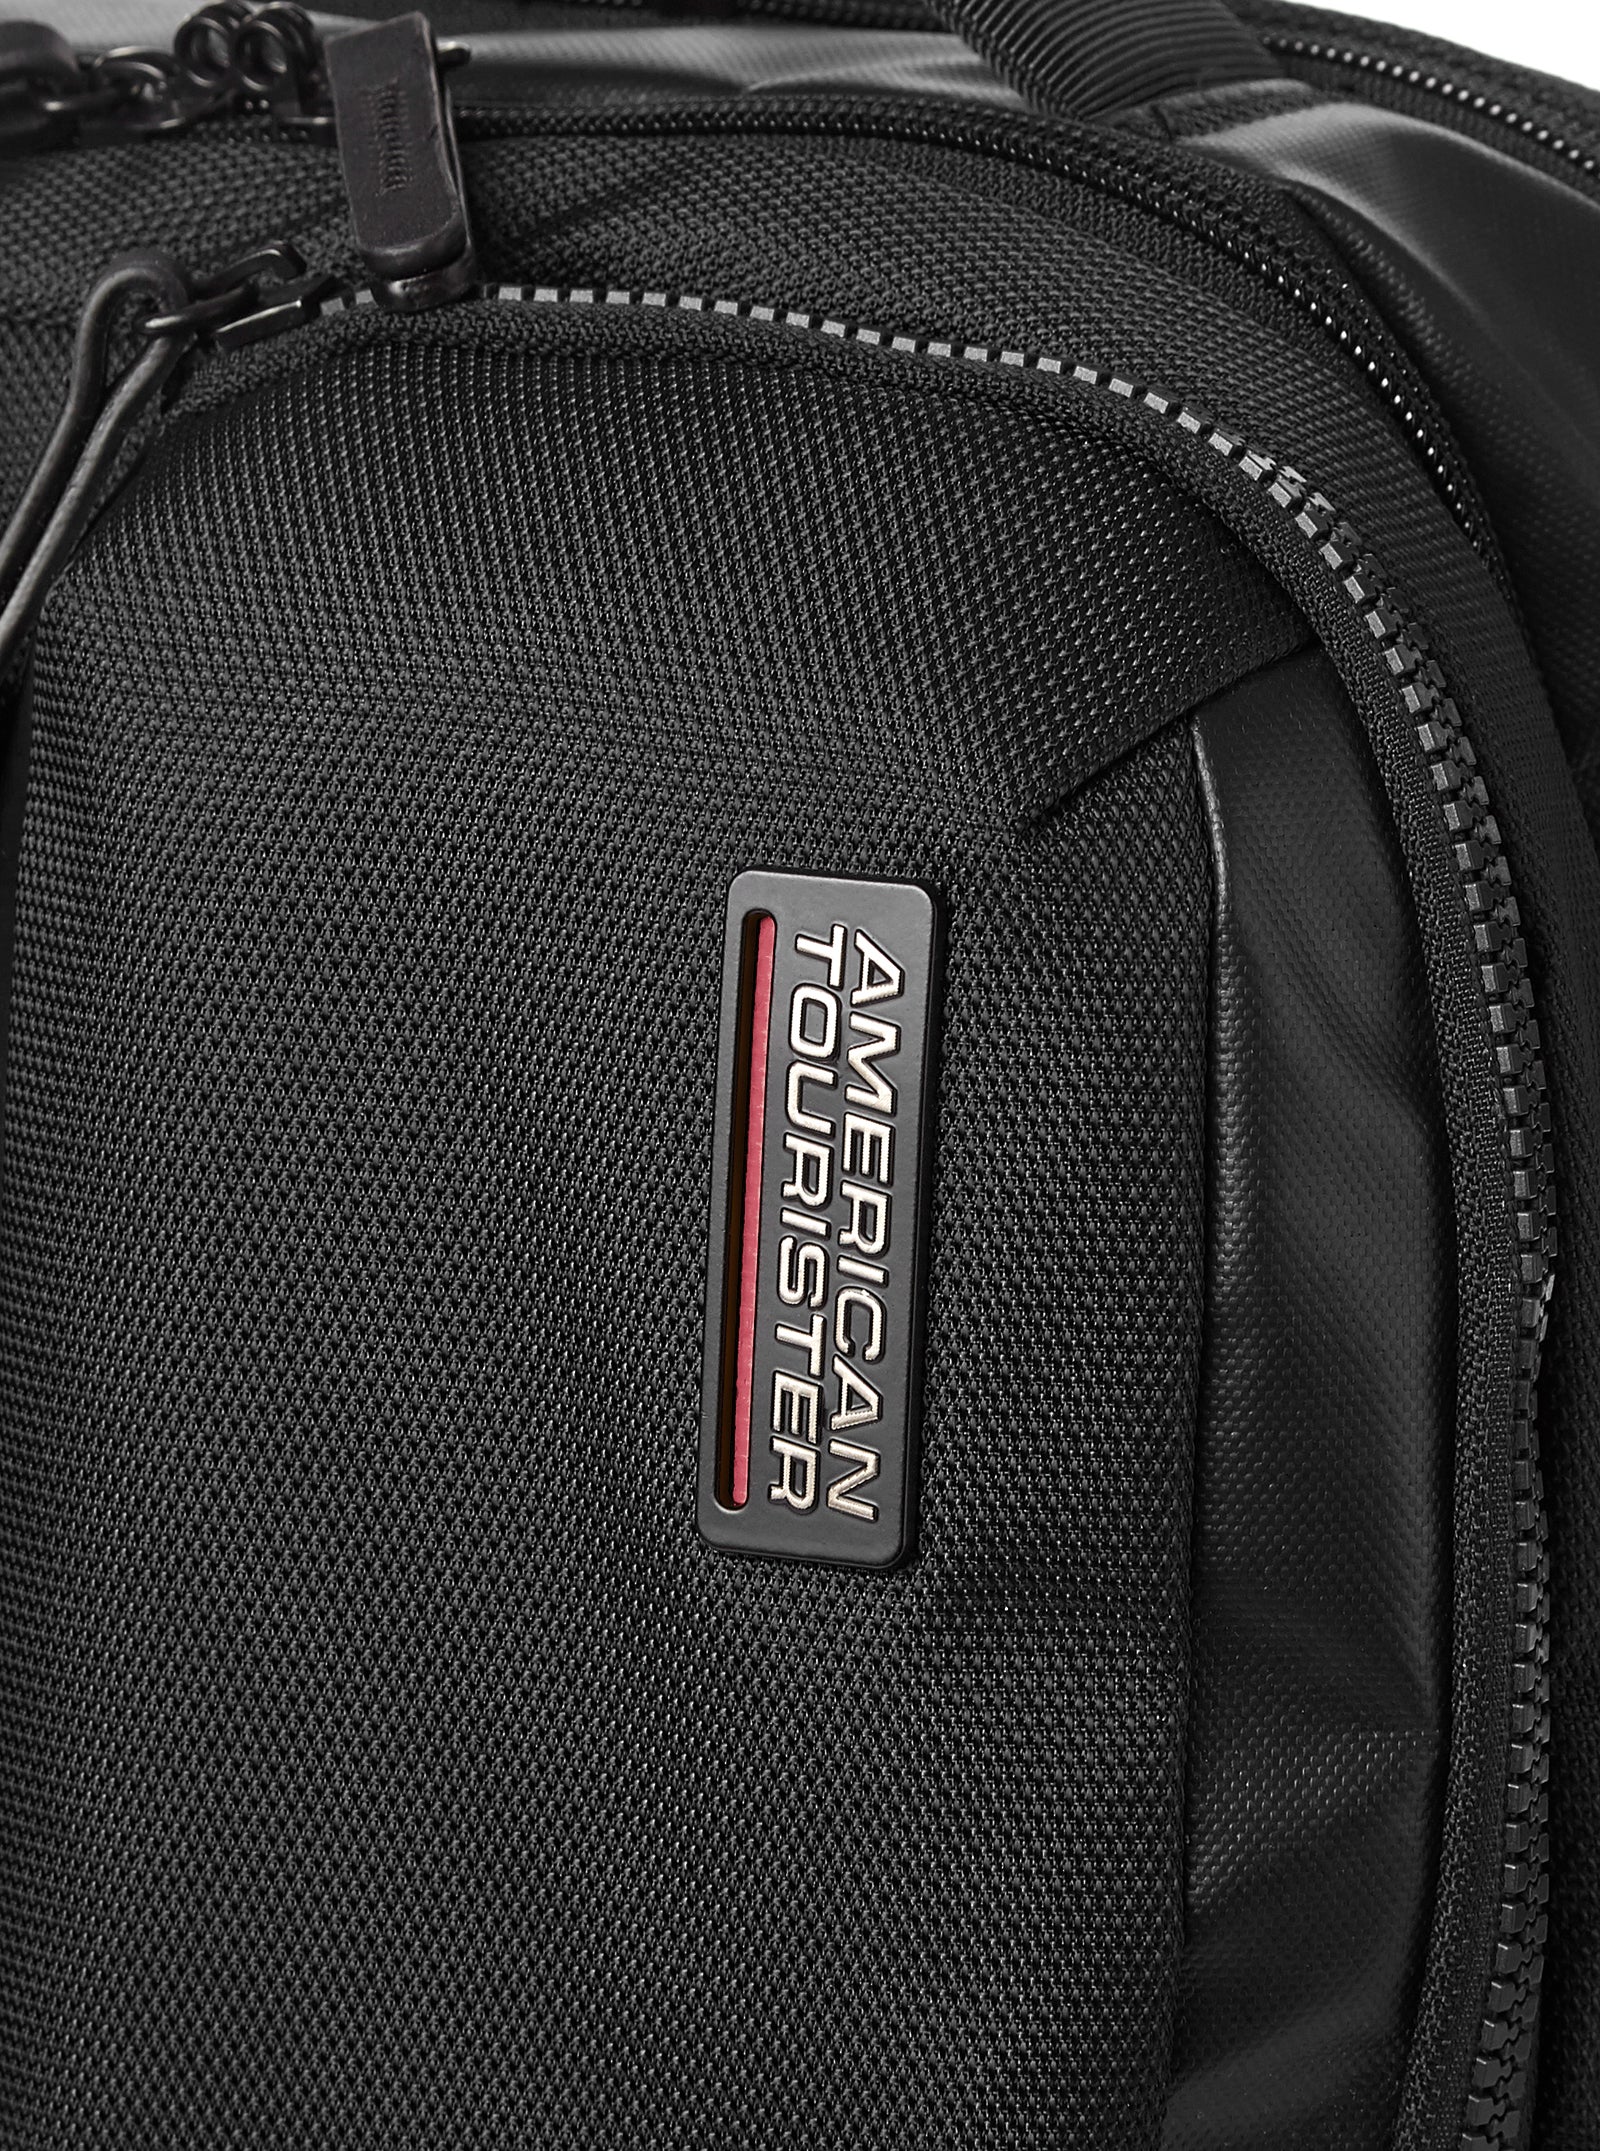 American Tourister - ZORK Backpack 2 AS - Black-12